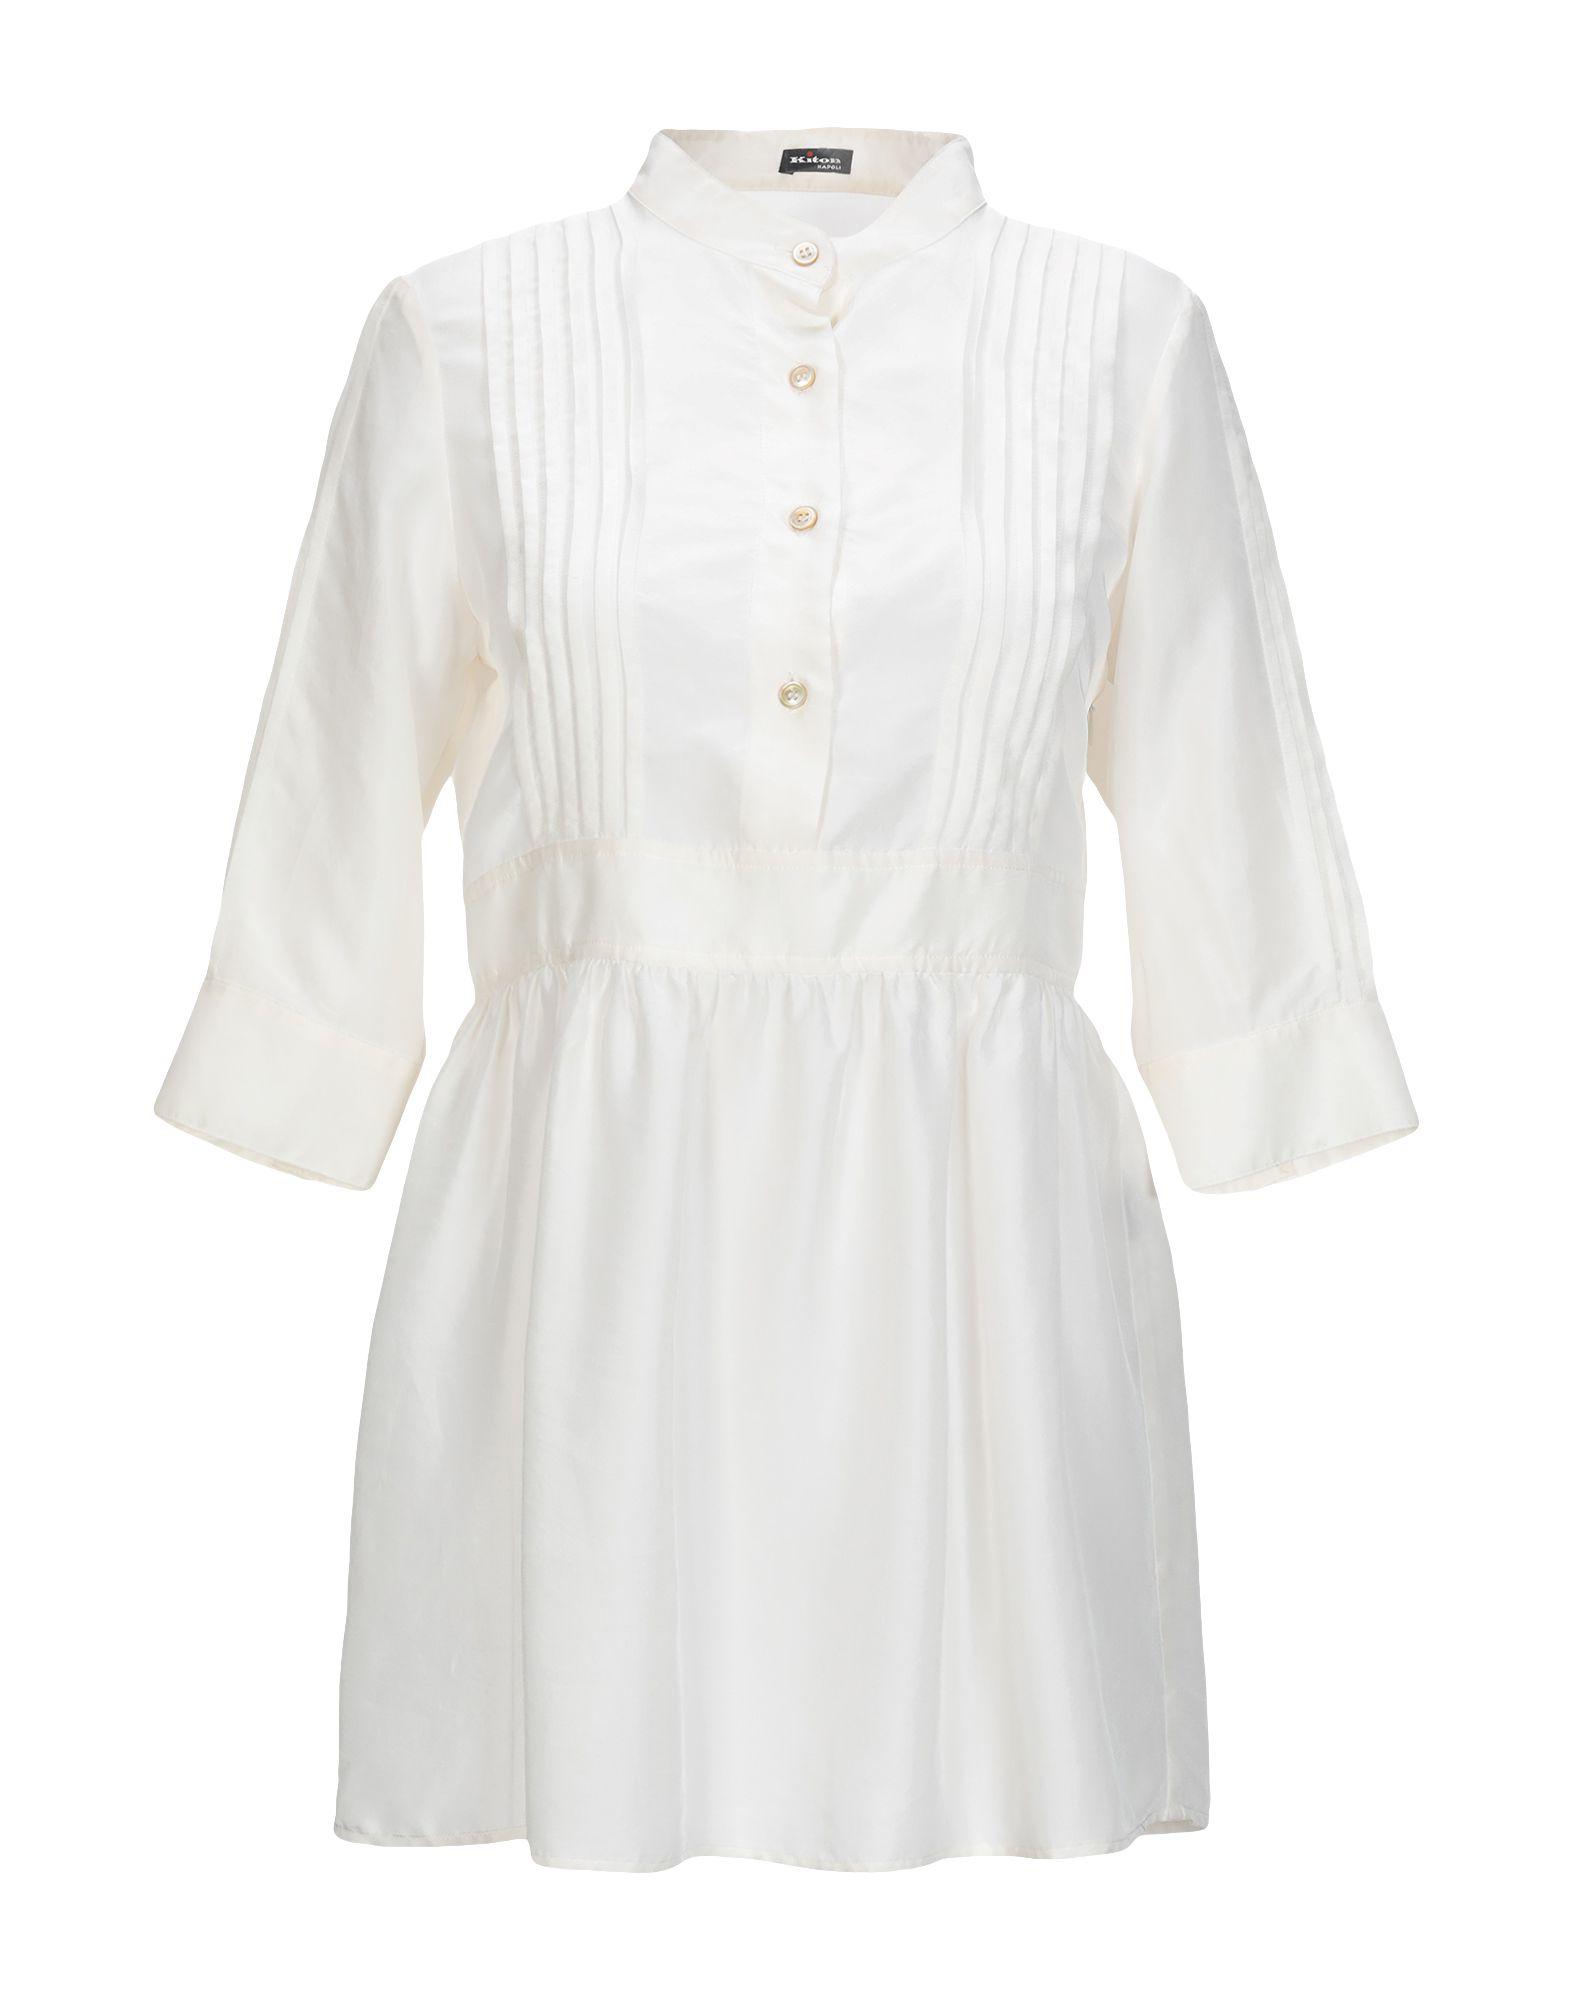 Kiton Satin Shirt in White - Lyst